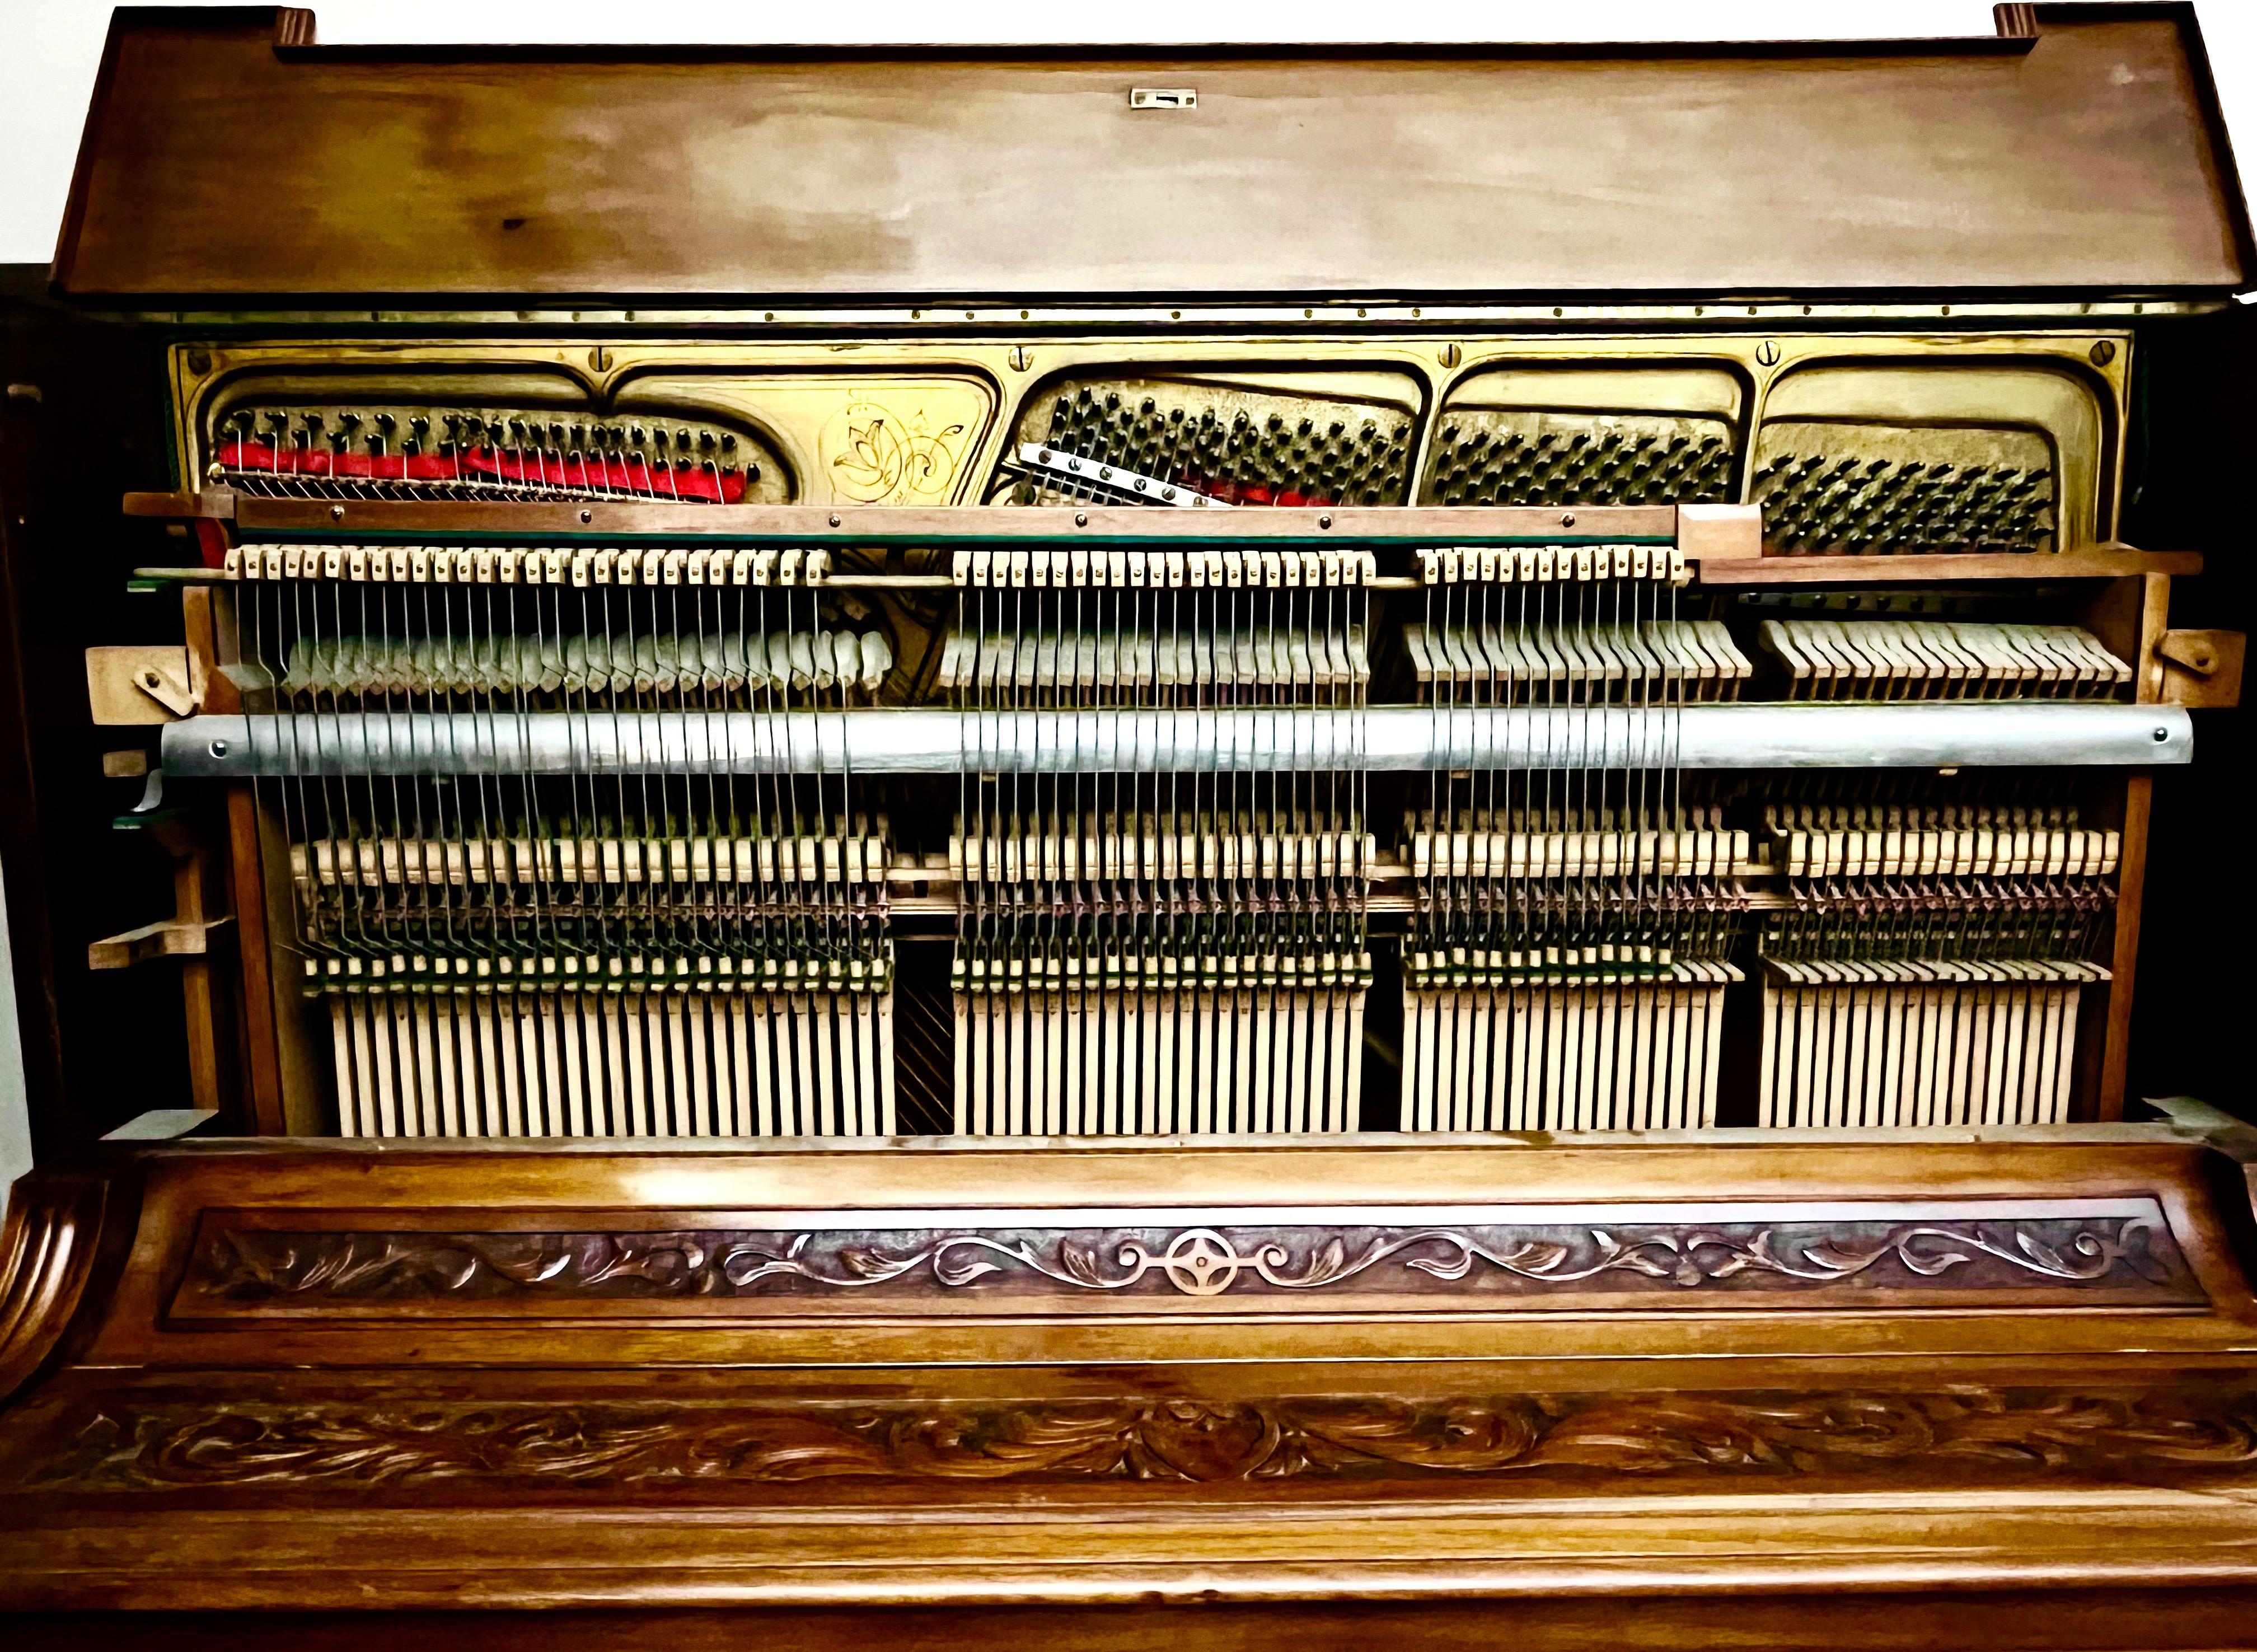 Dekoracyjne pianino salonowe